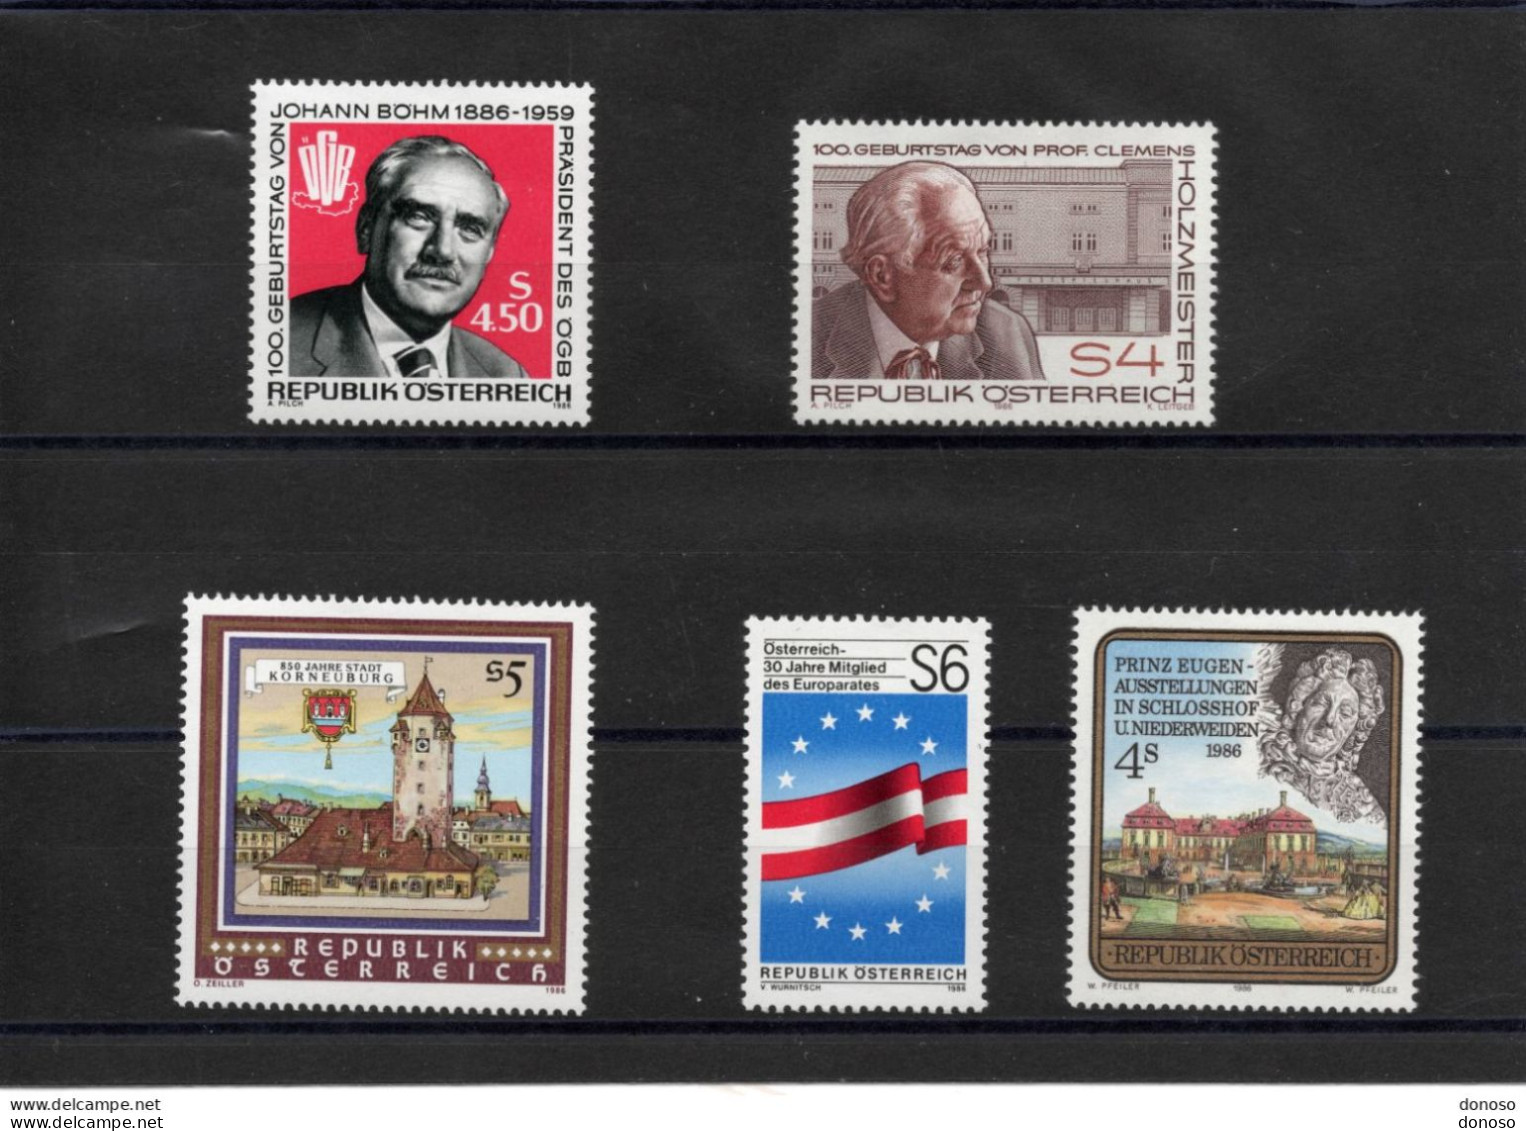 AUTRICHE 1986 Yvert 1666 + 1669 + 1671-1672 + 1674 NEUF** MNH Cote 7,20 Euros - Unused Stamps